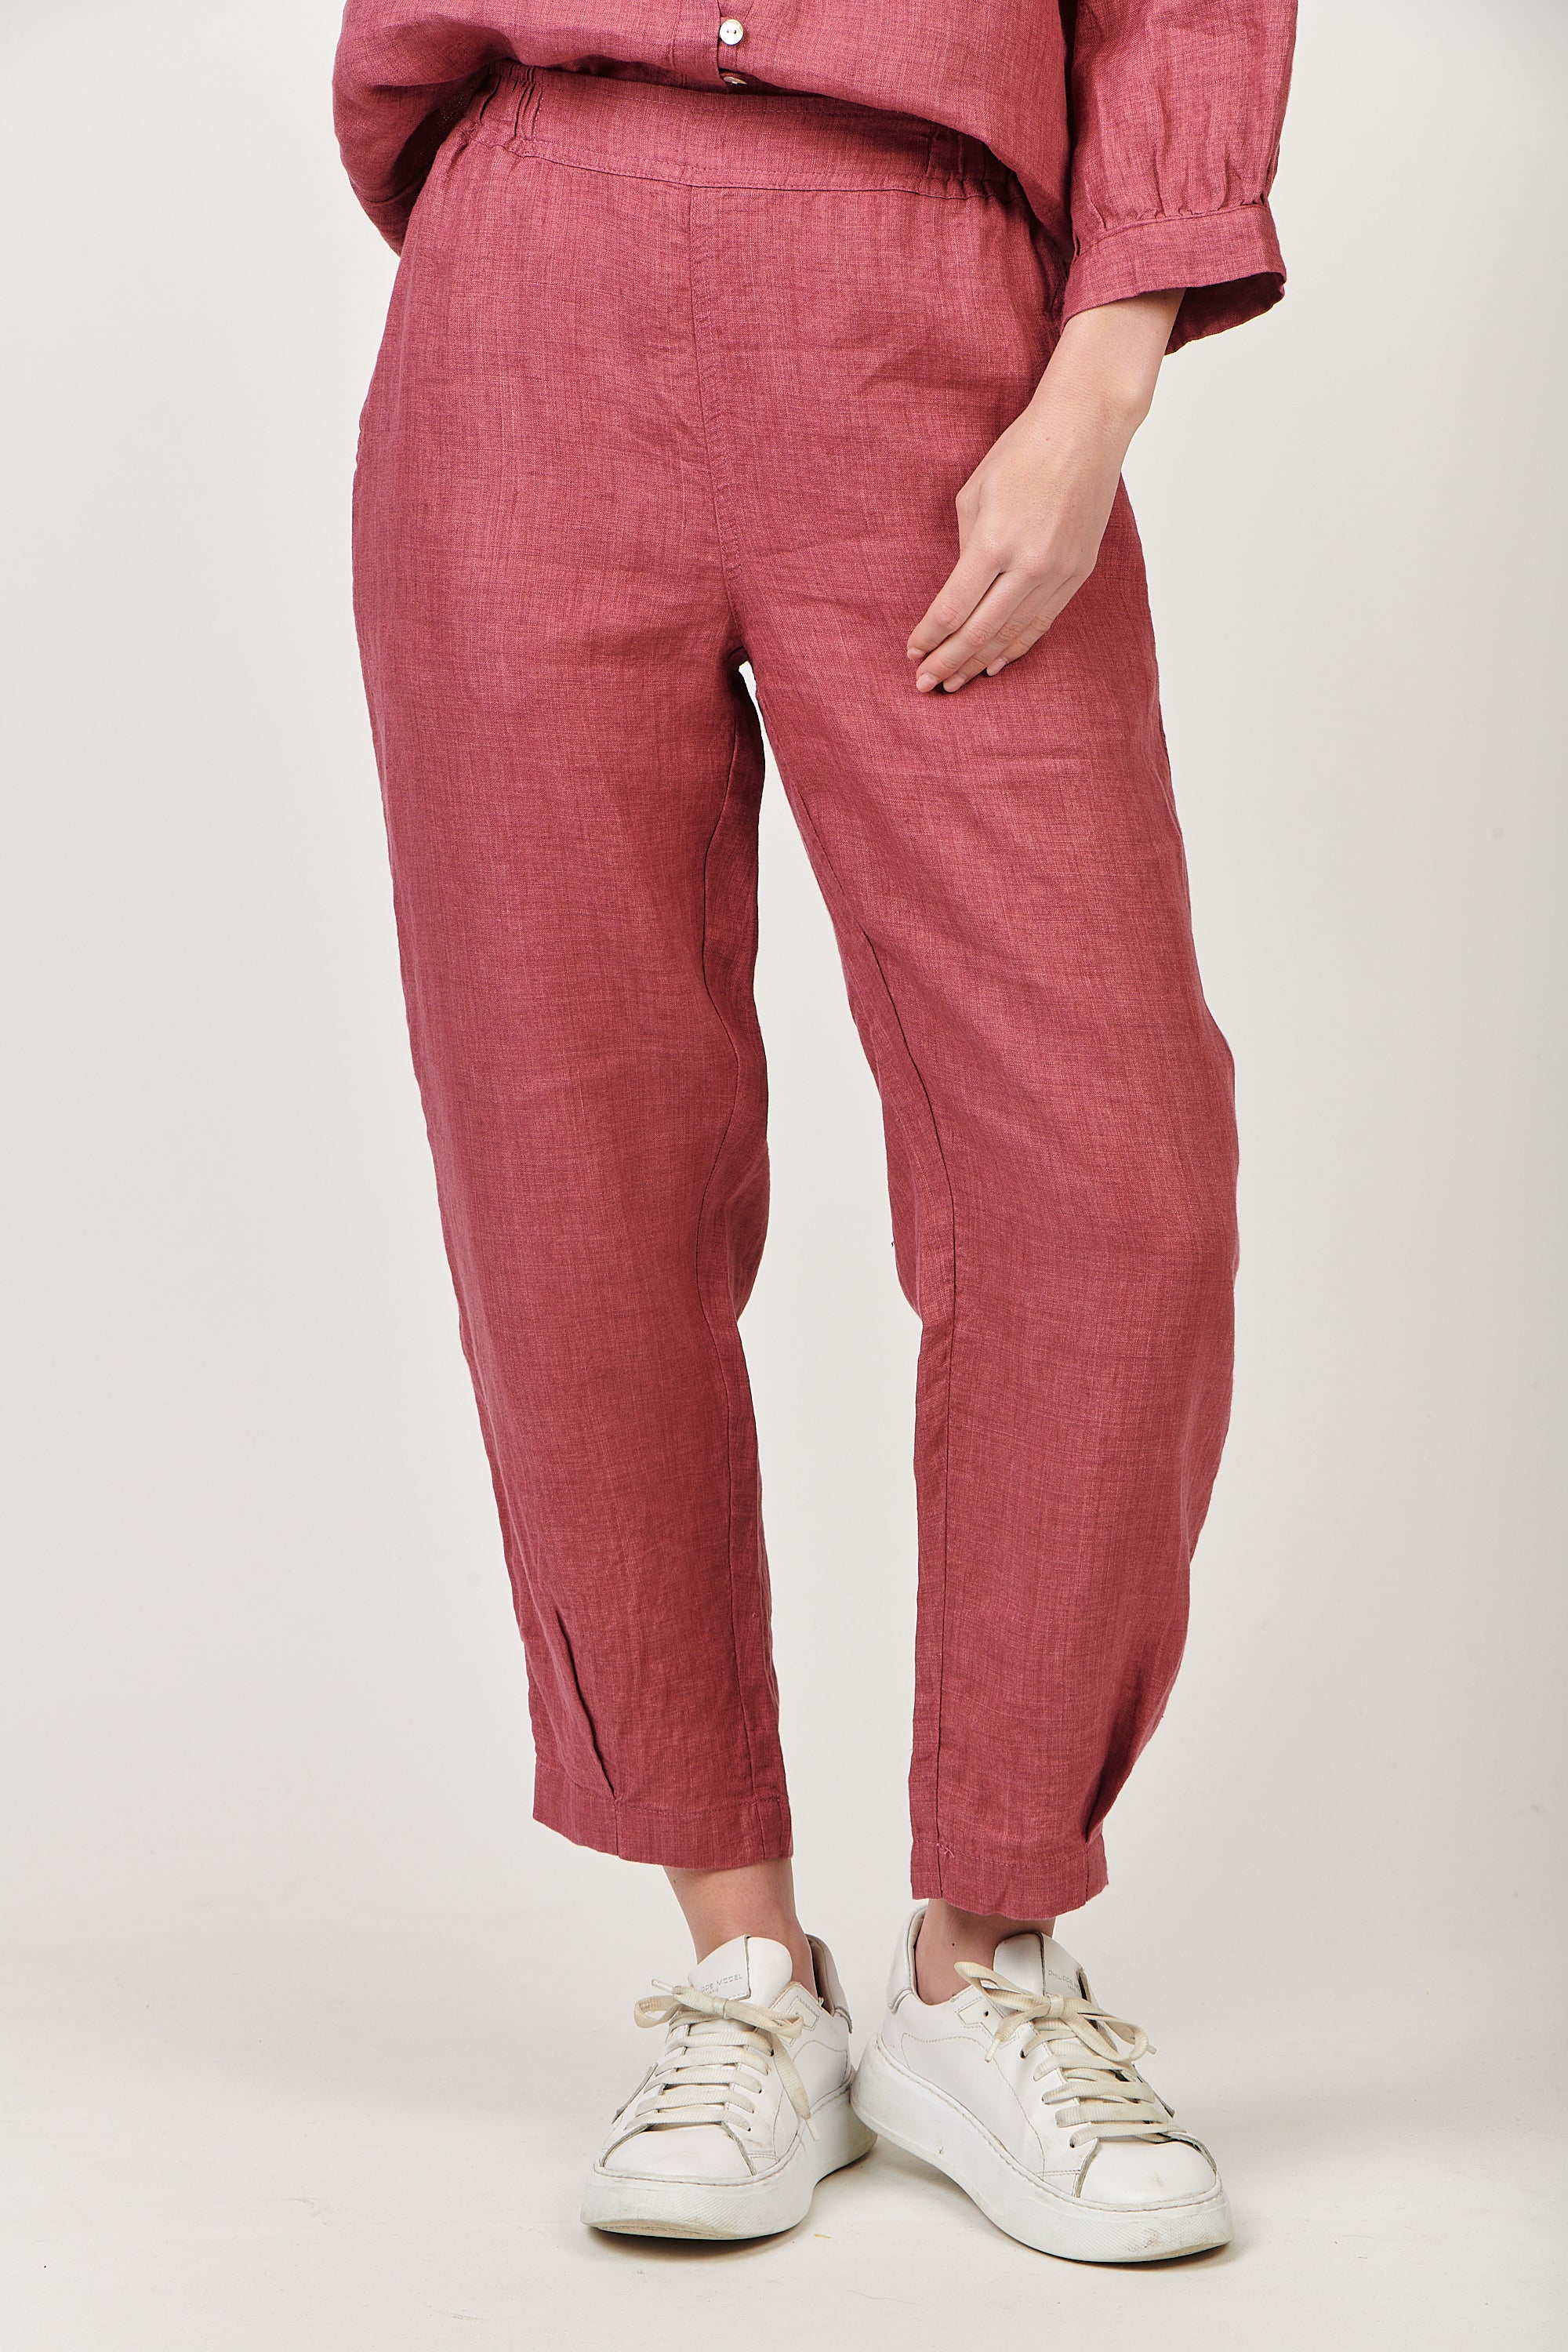 Linen Pants - Rhubarb-Pants-Naturals by O&J-The Bay Room